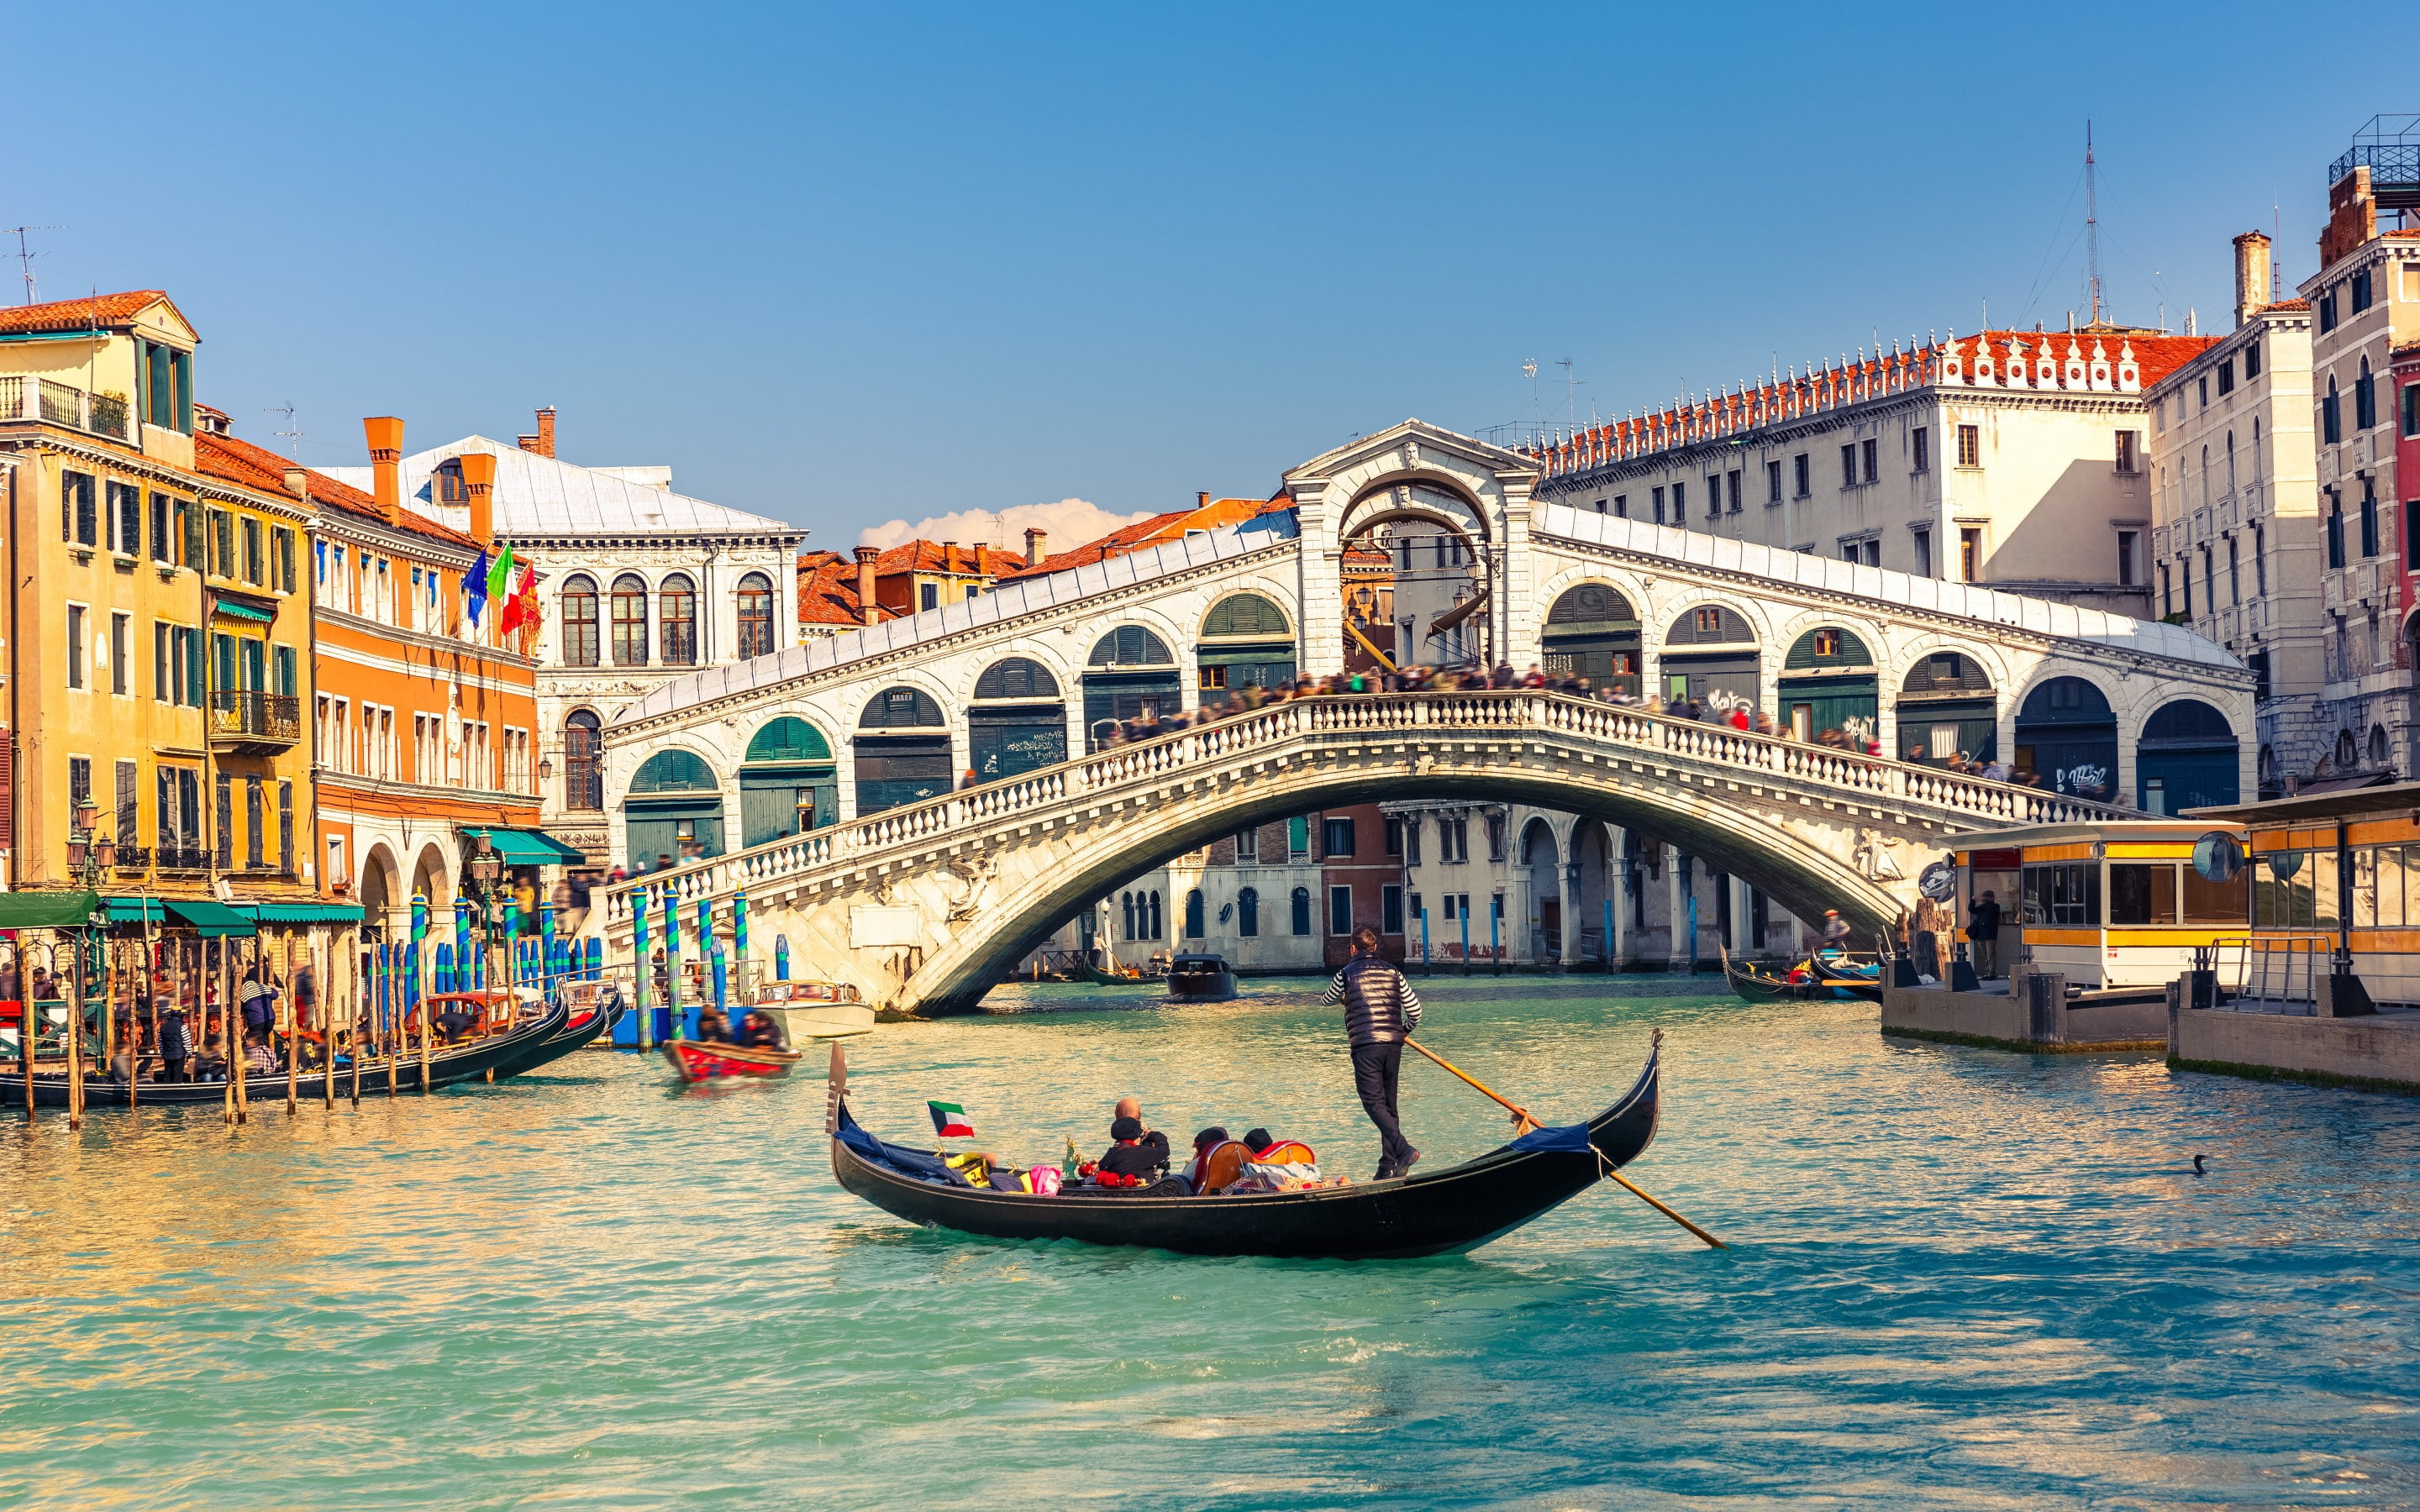 Rialto Bridge, Venice, Italy, grand canal at venice, building